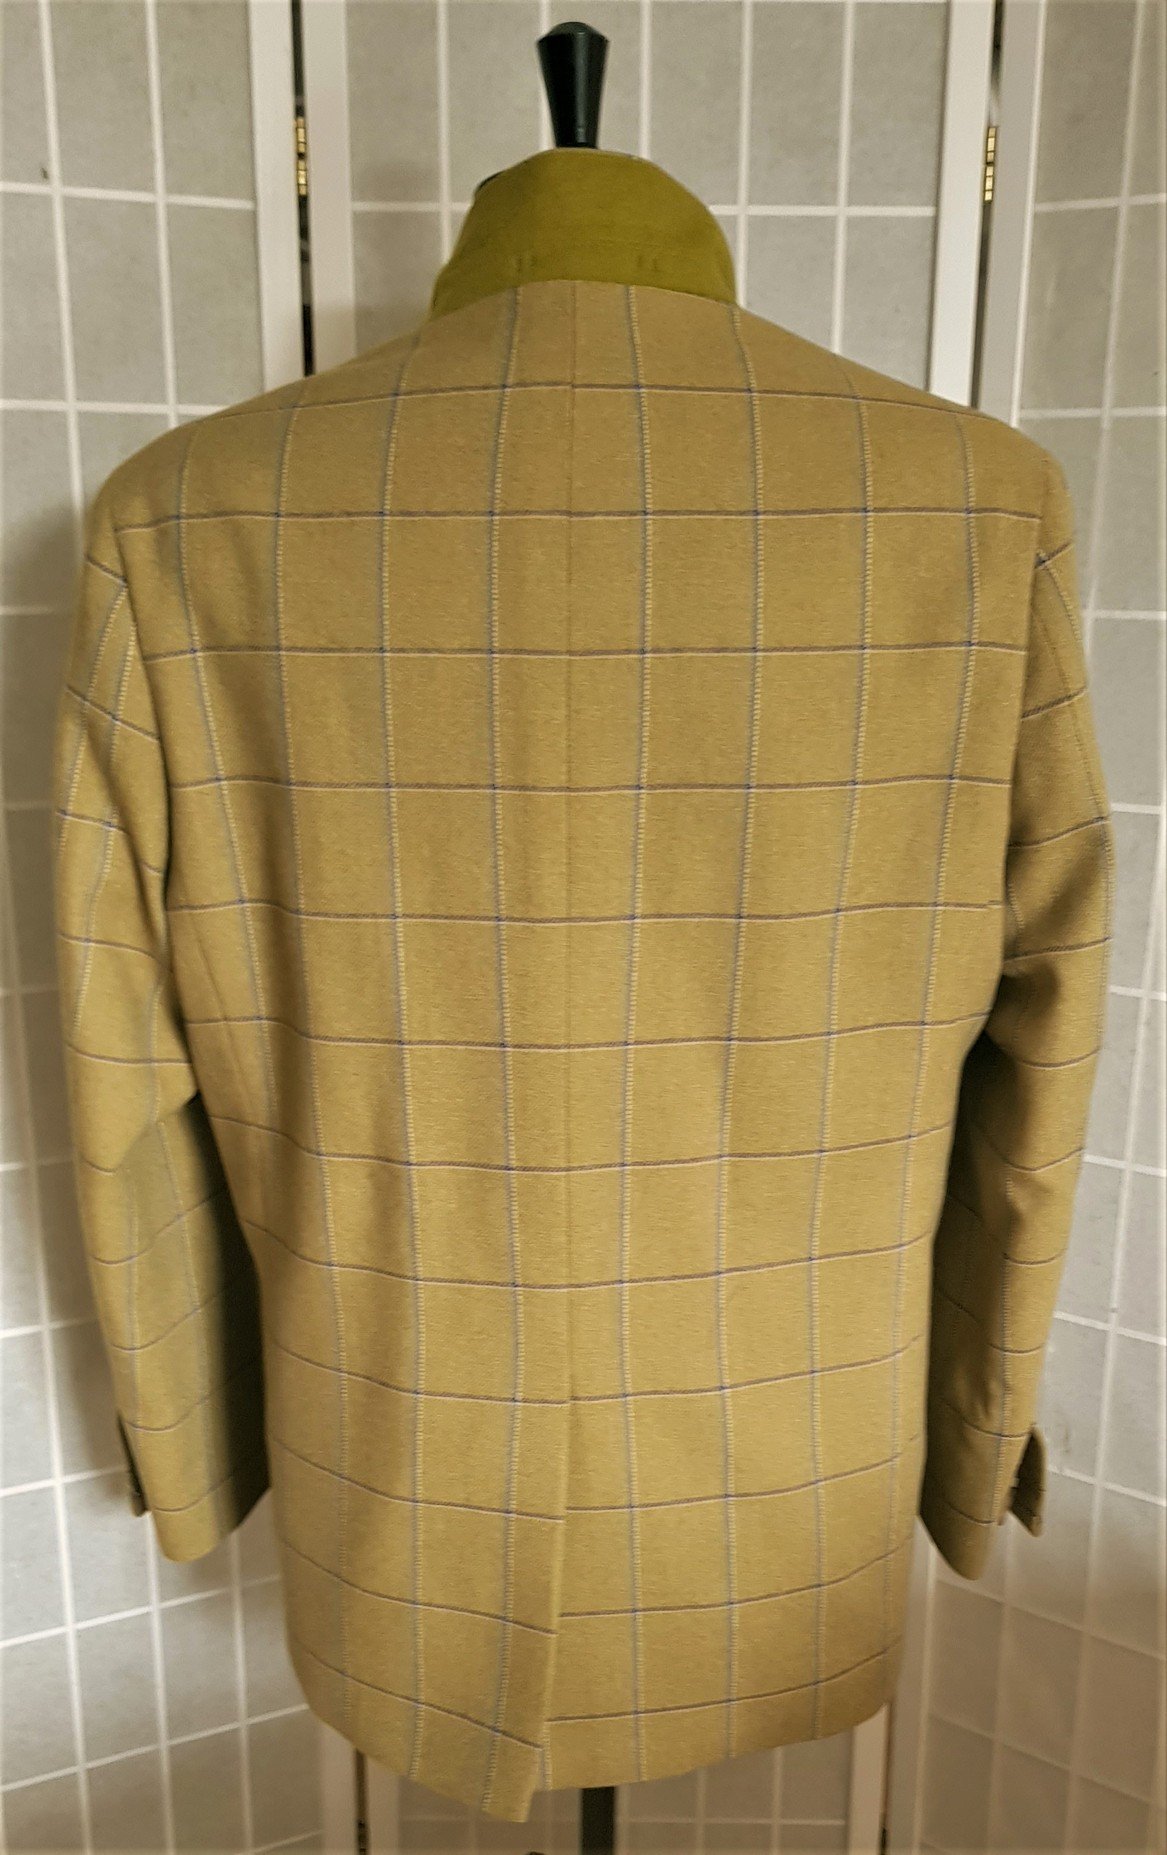 Tweed jacket in Porter and Harding Hartwist (8).jpg